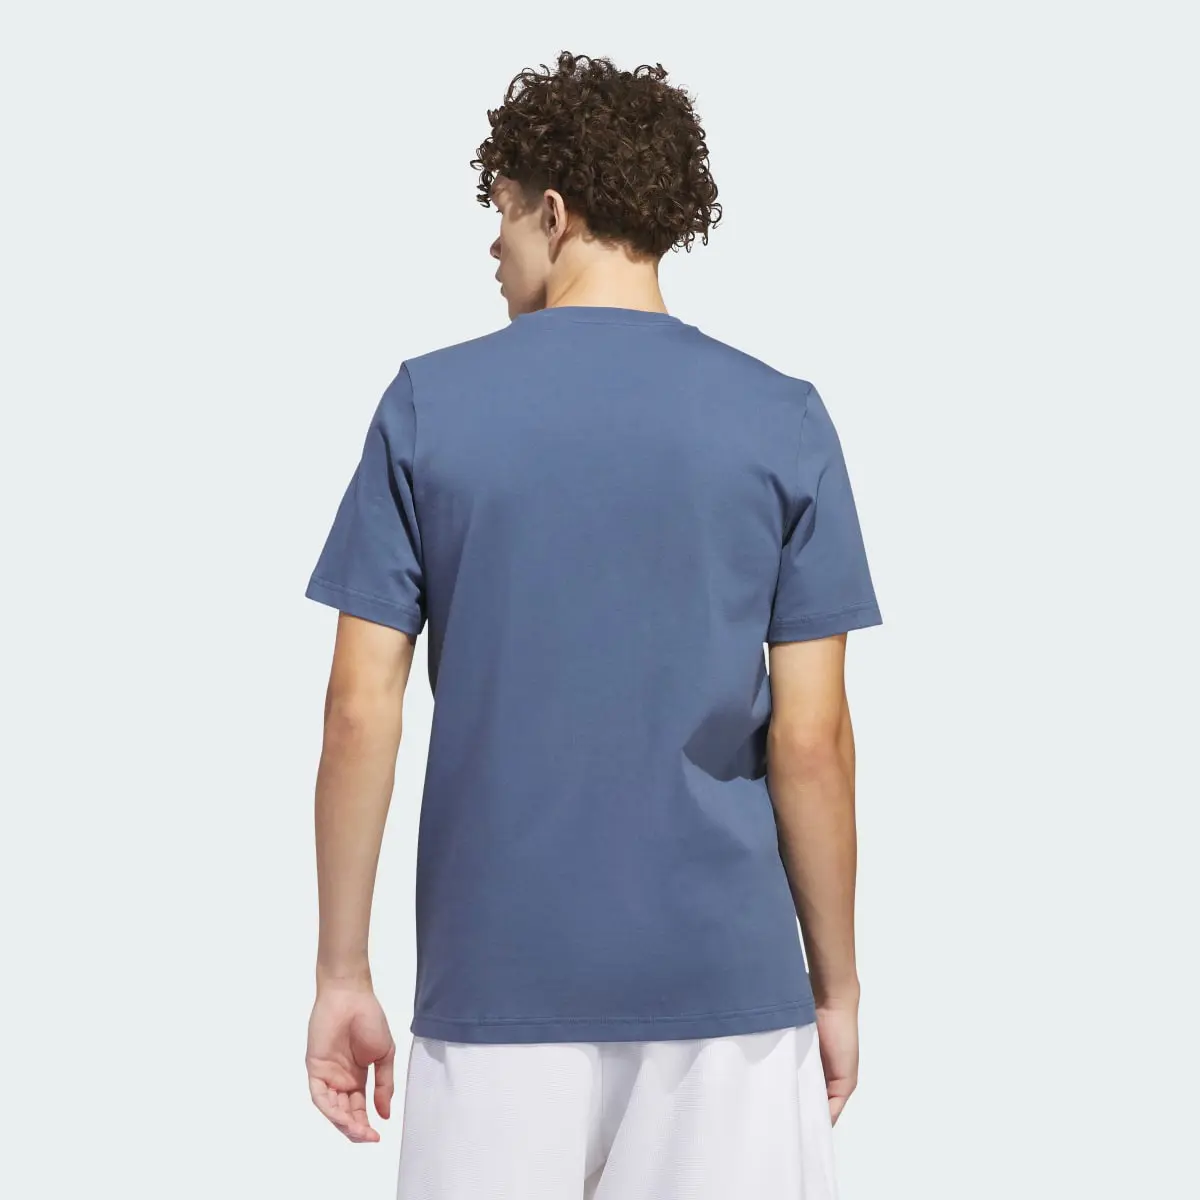 Adidas x Malbon Graphic T-Shirt. 3